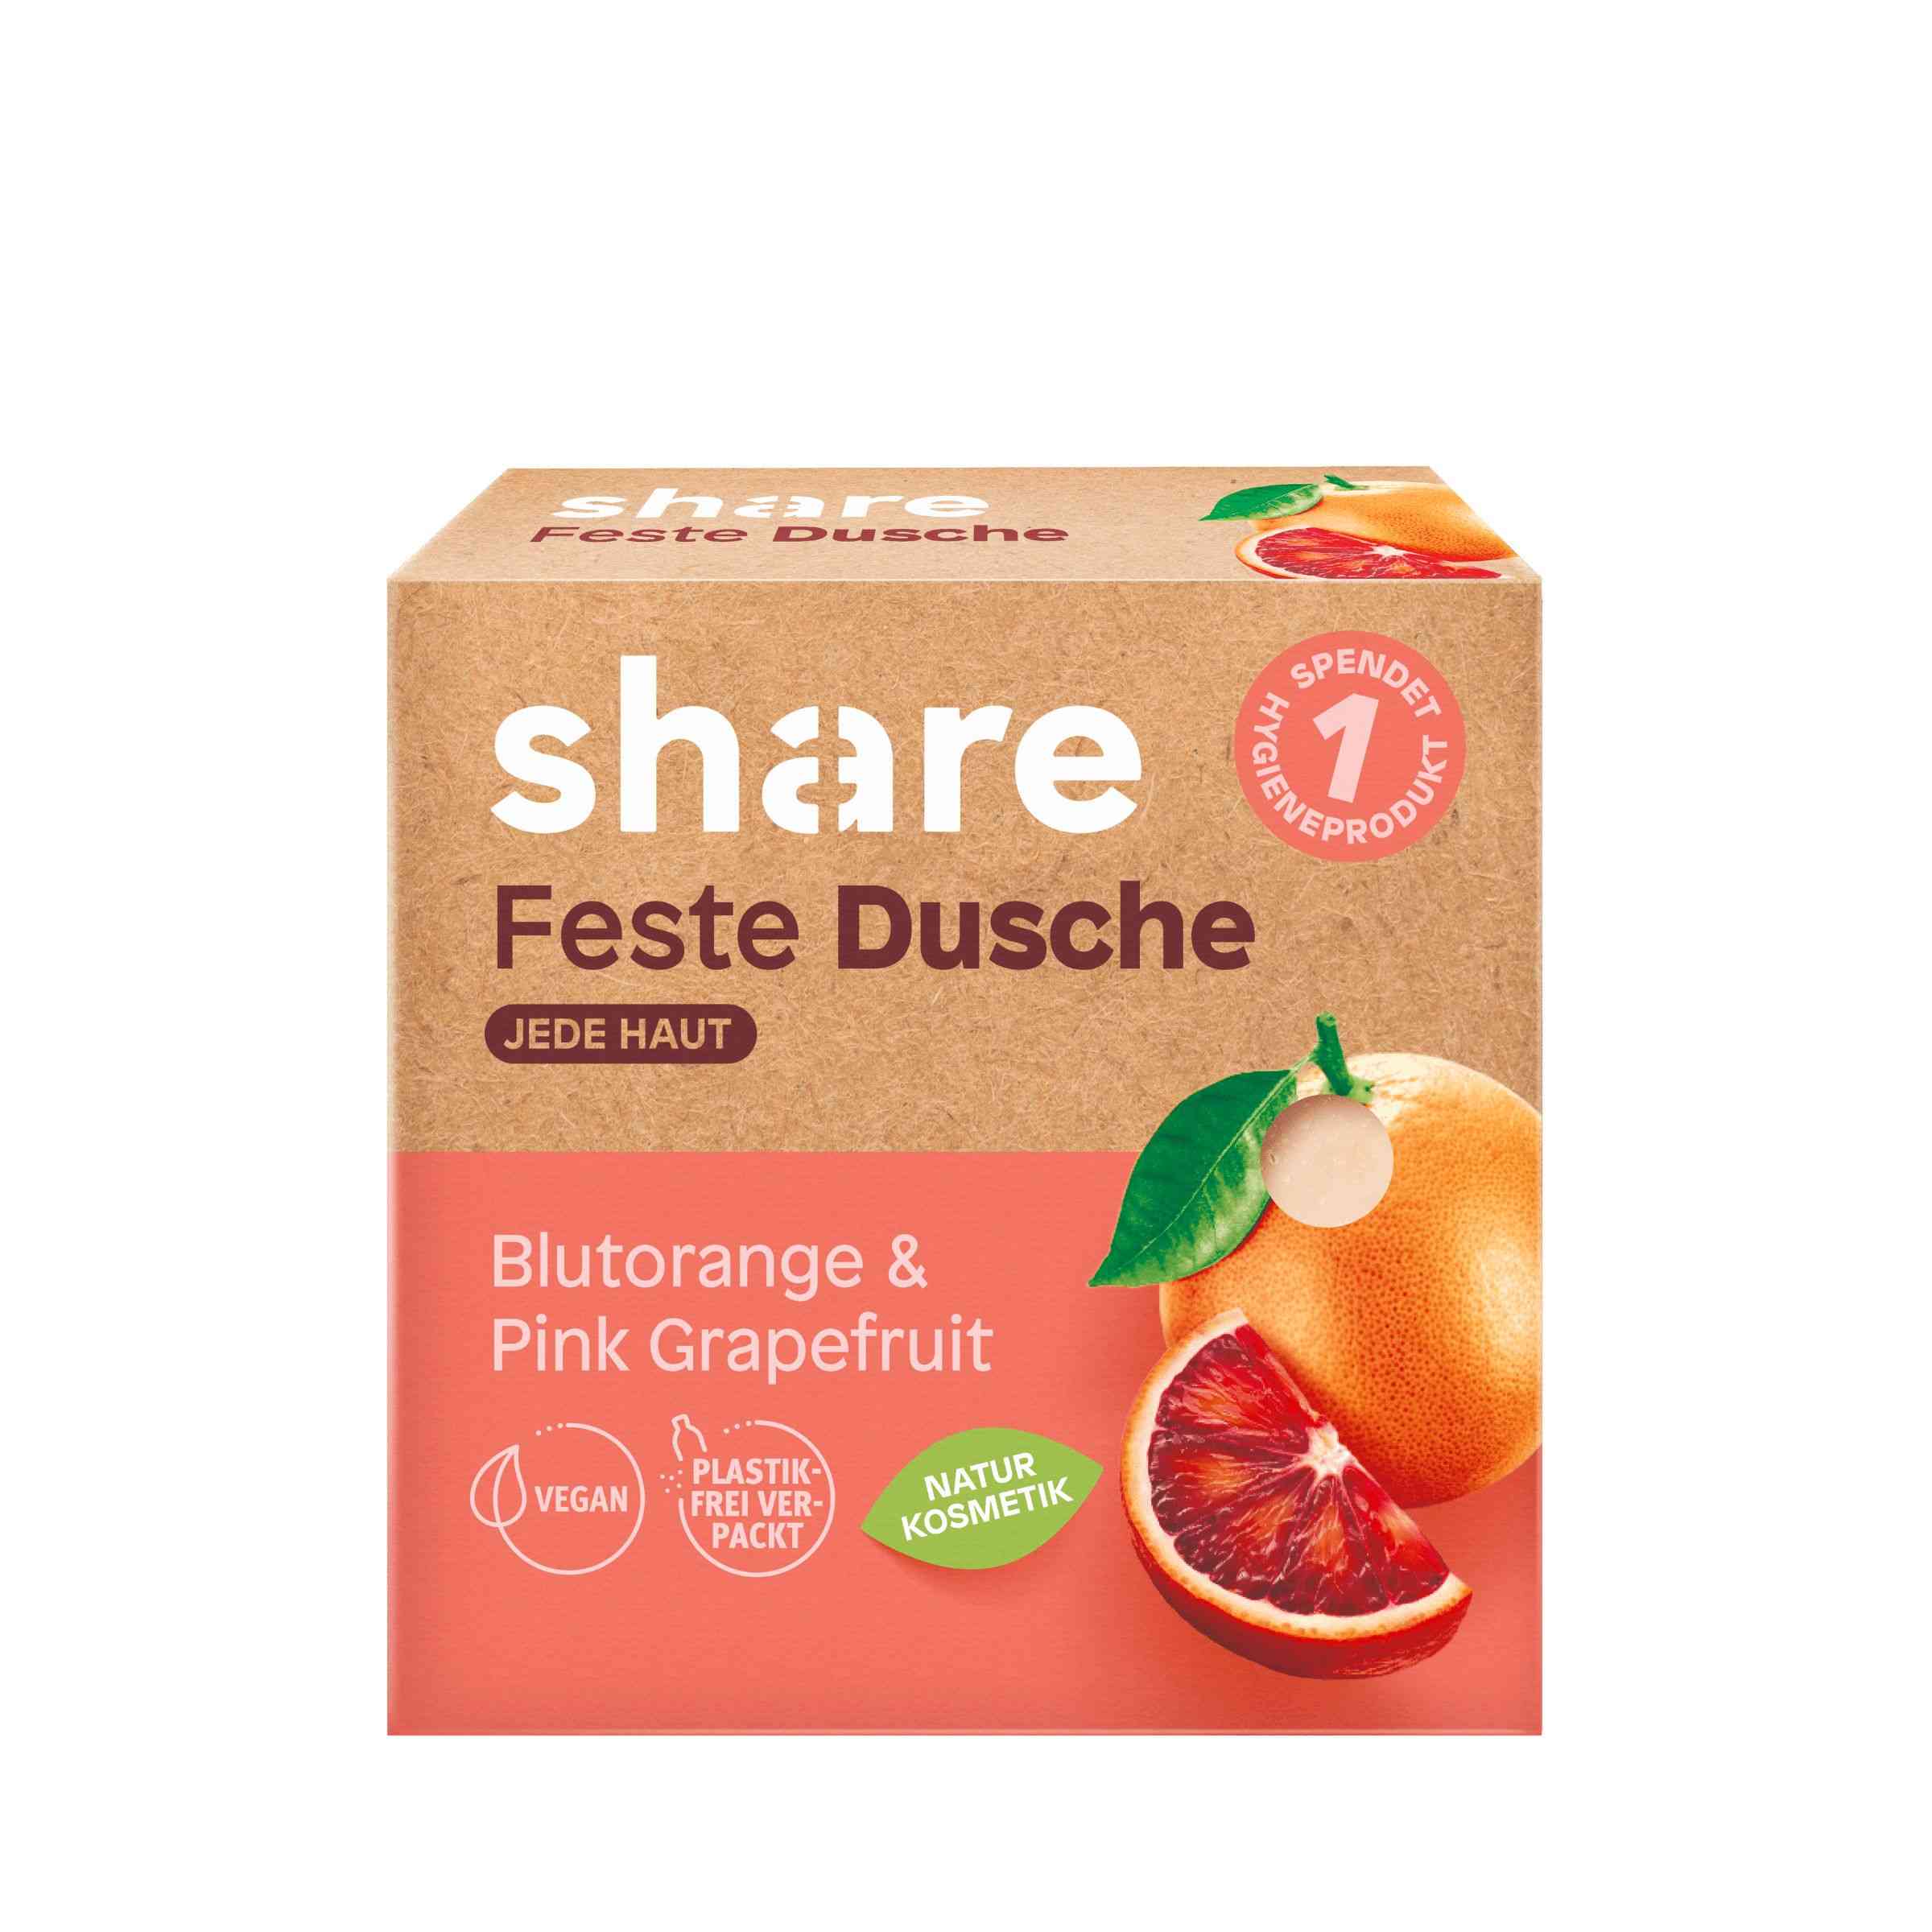 share NK Feste Dusche Blutorange & Pinke Grapefruit